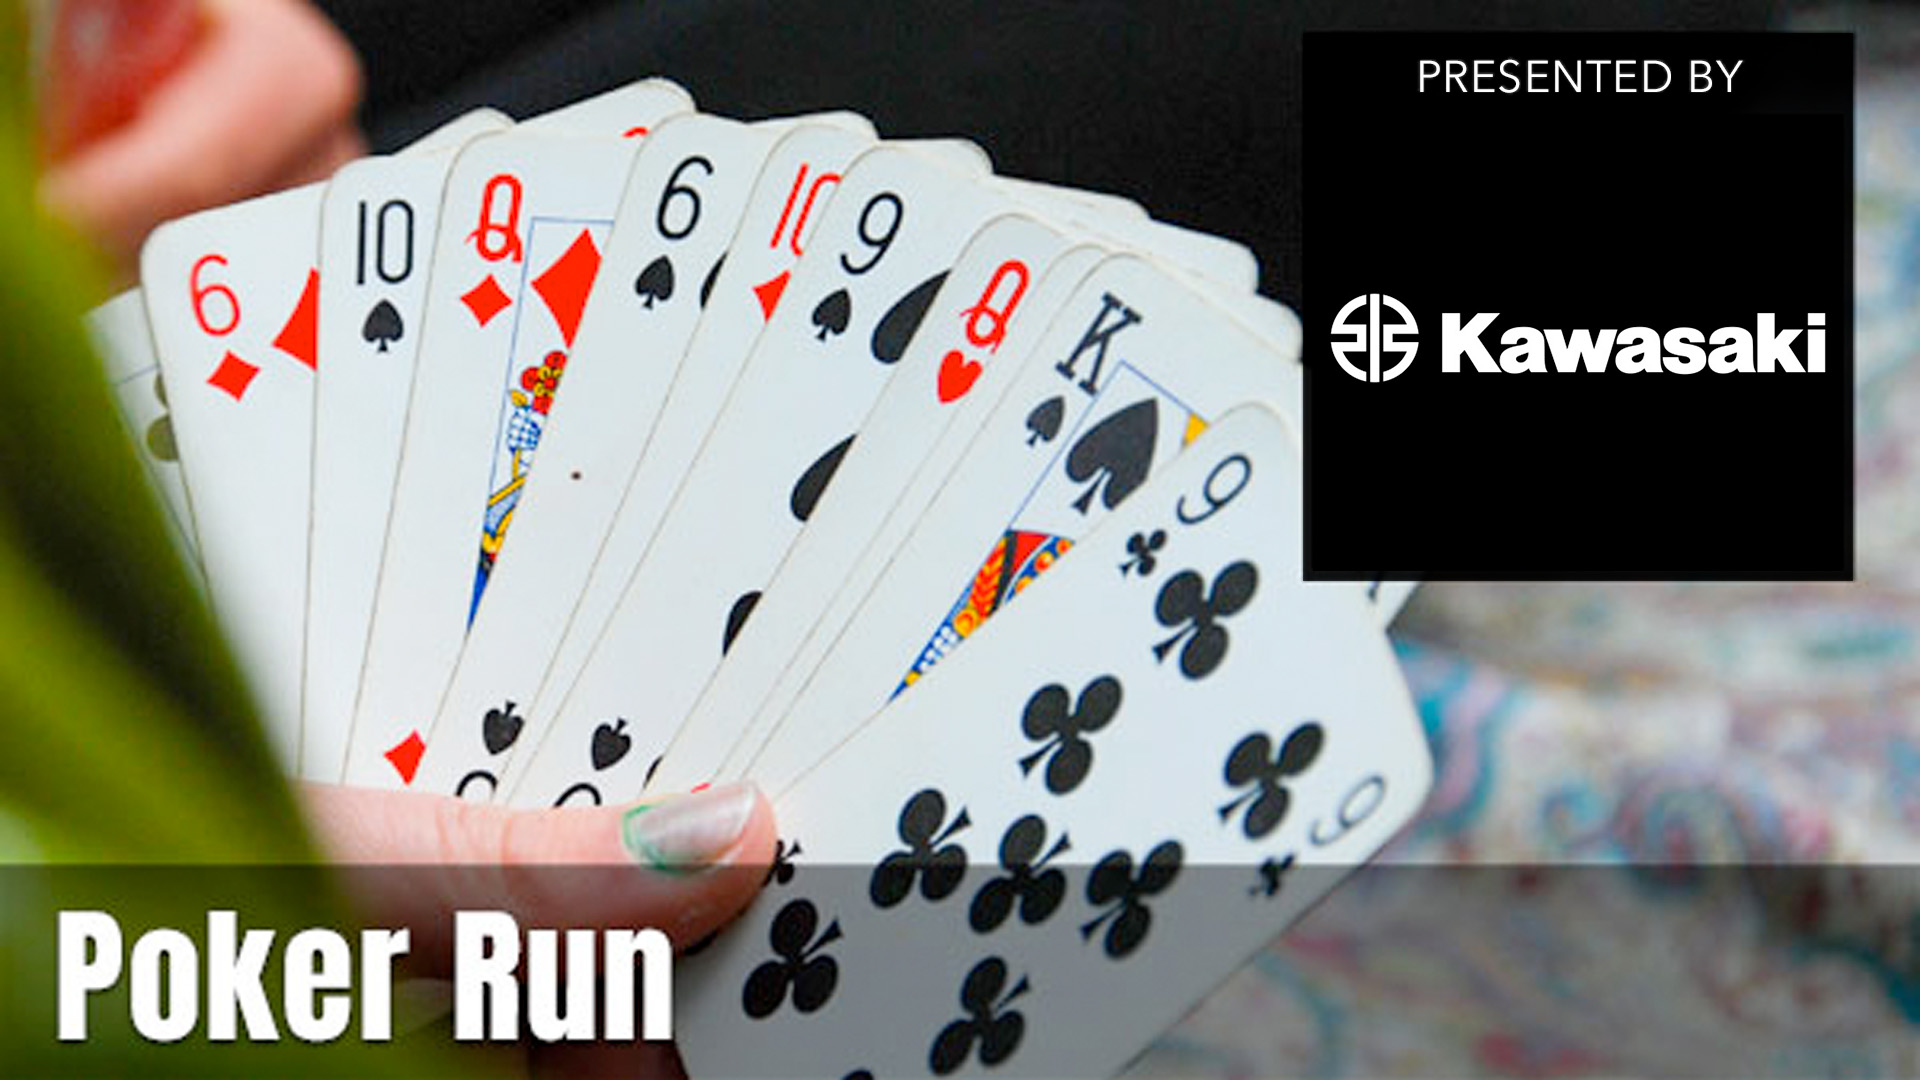 Poker Run presented by Kawasaki